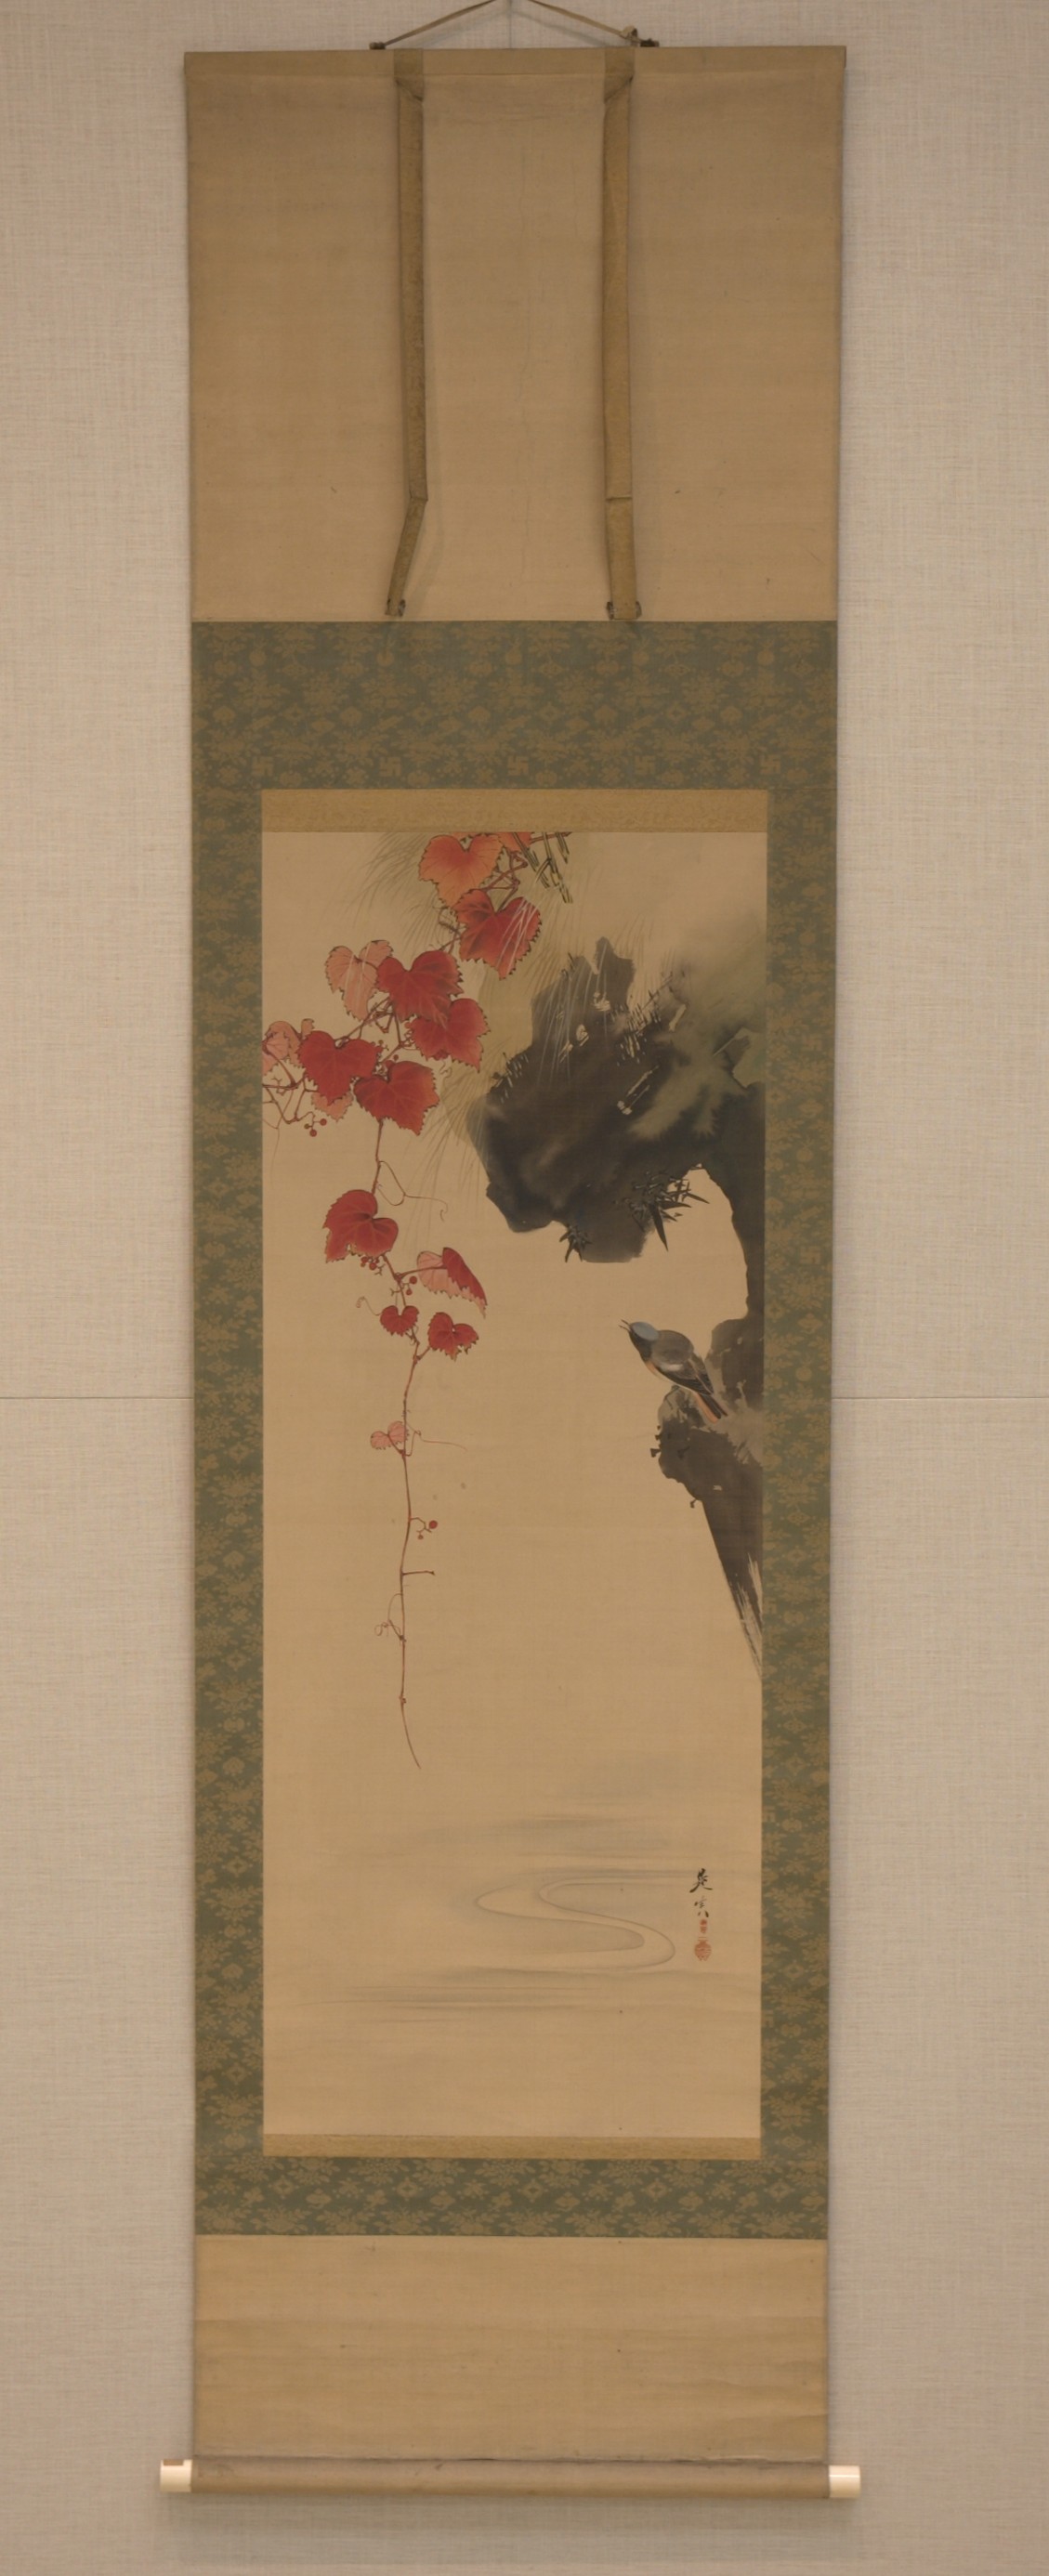 Shibata Zeshin | Leaves and Bird | Japan | The Metropolitan Museum of Art